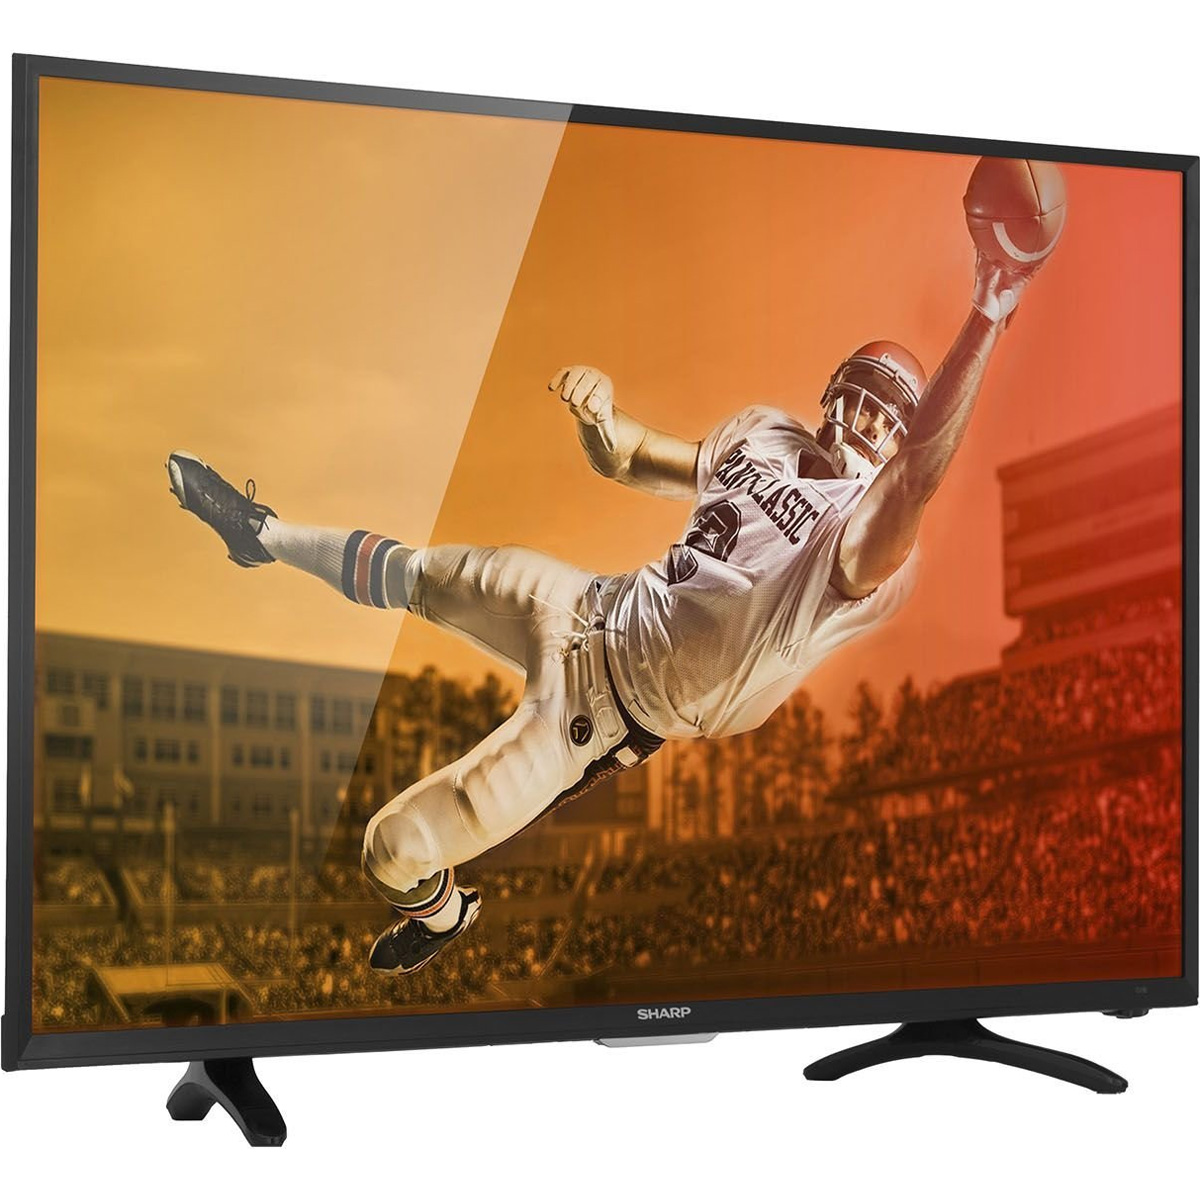 Sharp 50" Class FHD (1080p) LED TV (LC-50N3100U) - image 2 of 5